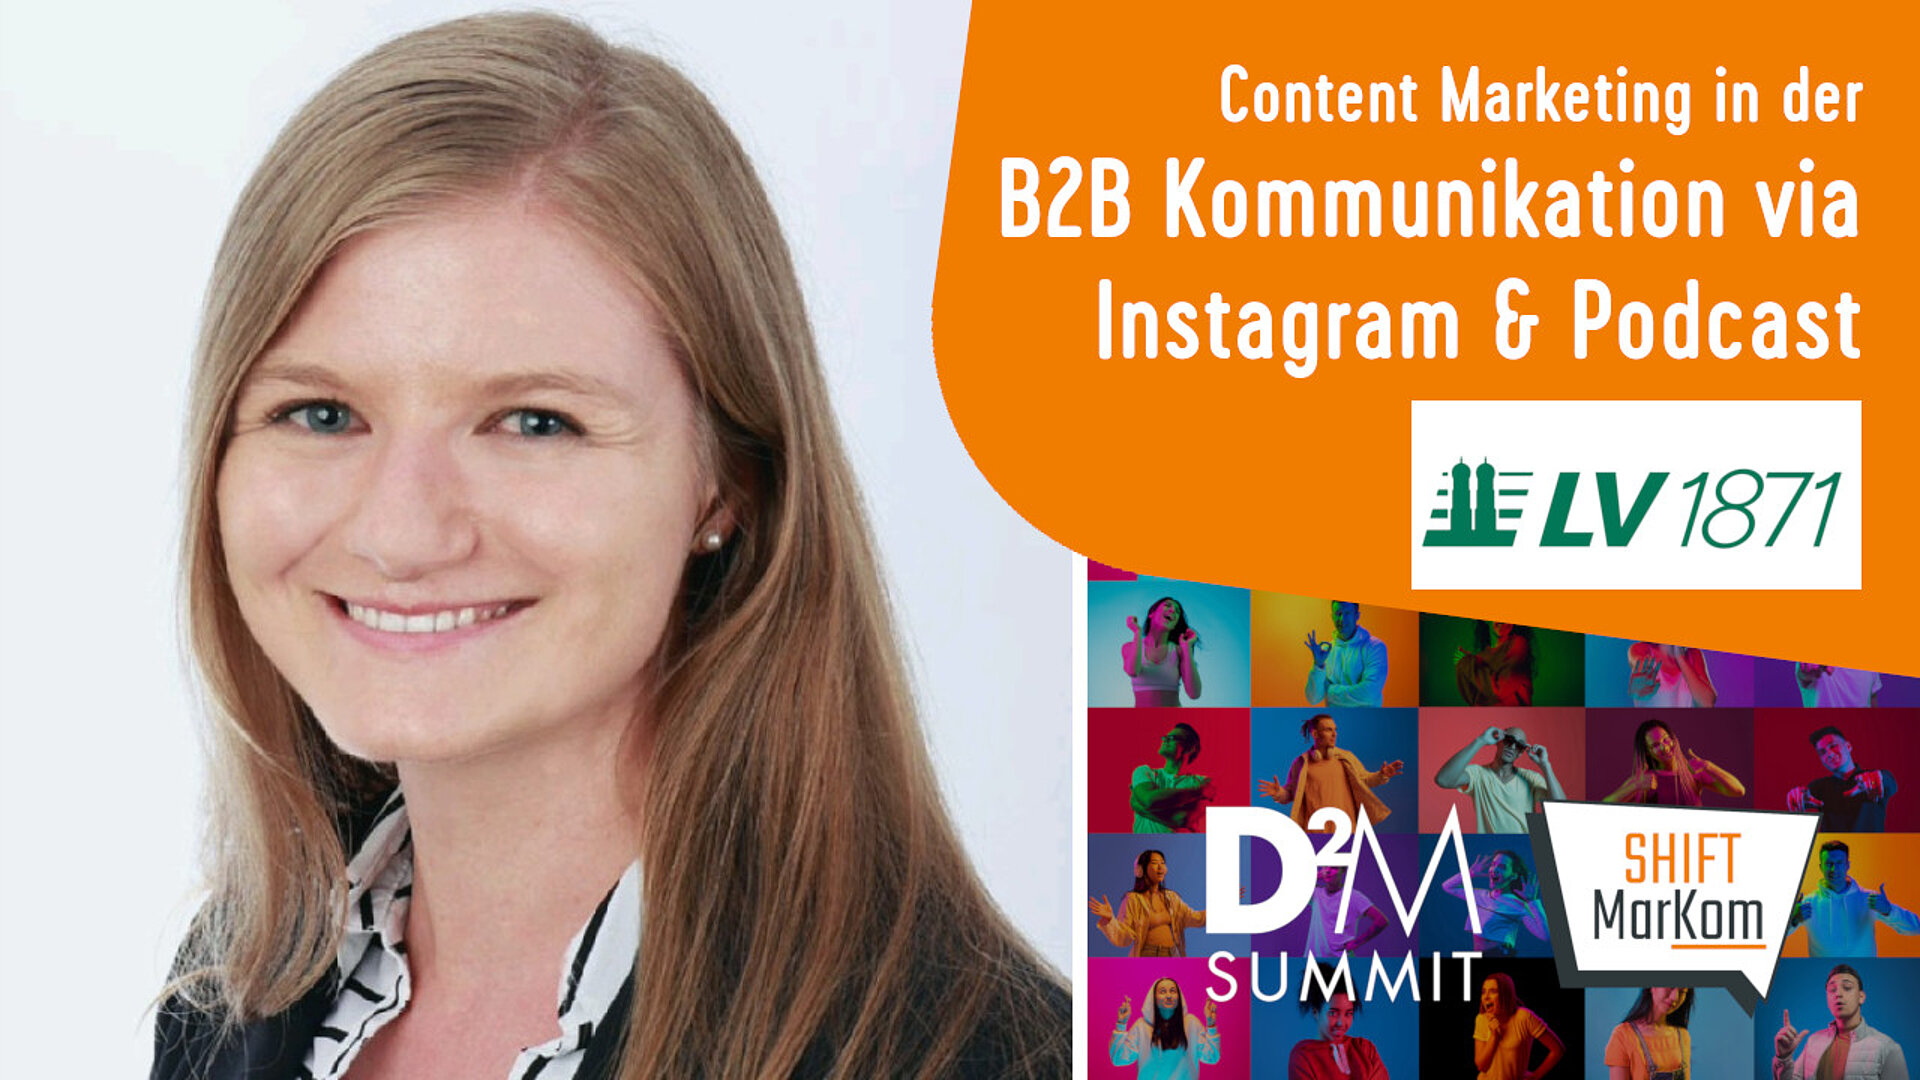 Content Marketing in der B2B Kommunikation via Instagram & Podcast